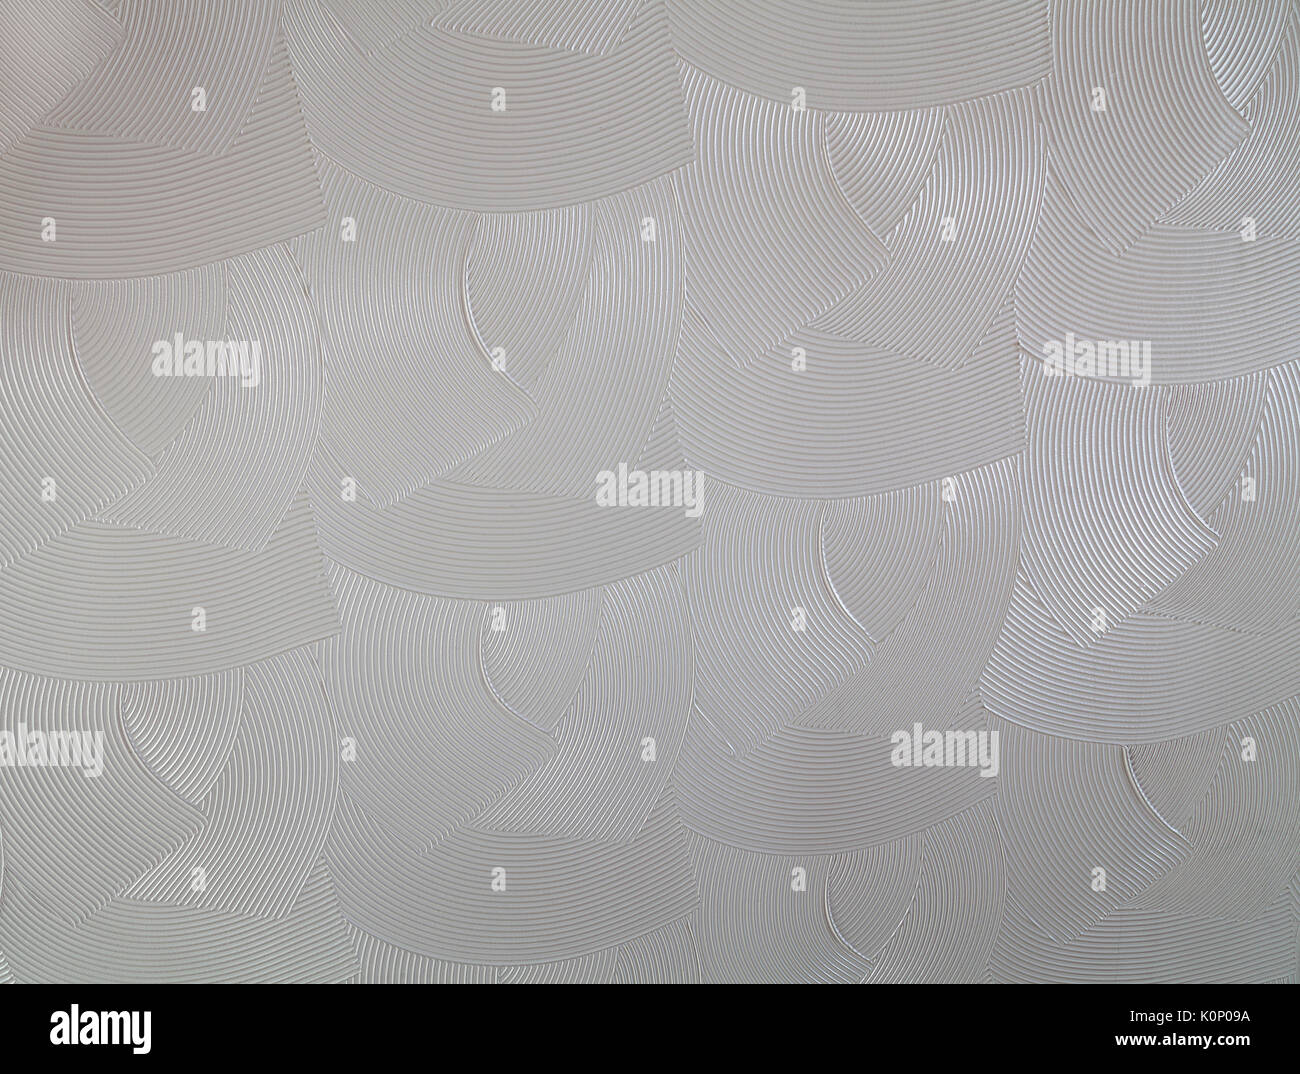 Standard Artex Ceiling Pattern Stock Photo 155376518 Alamy